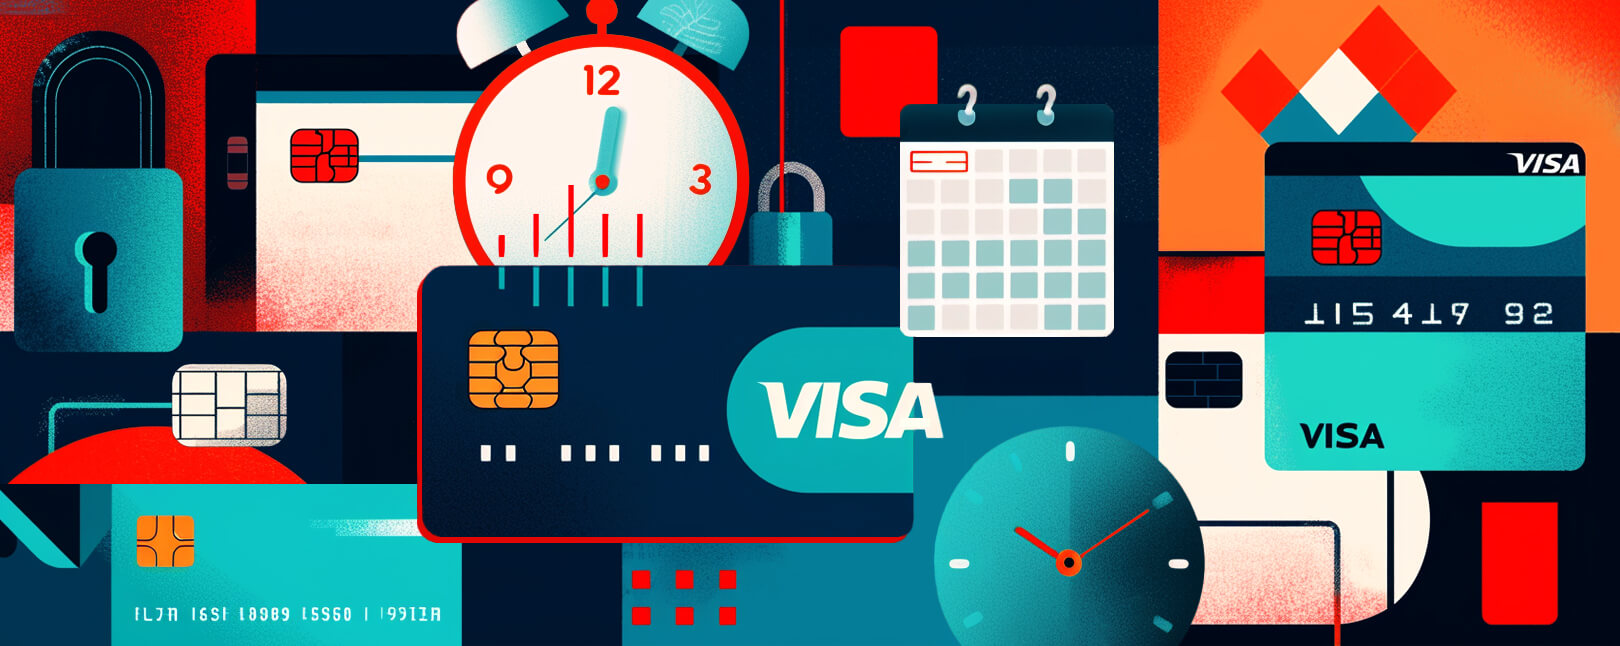 Visa Chargeback Time Limits